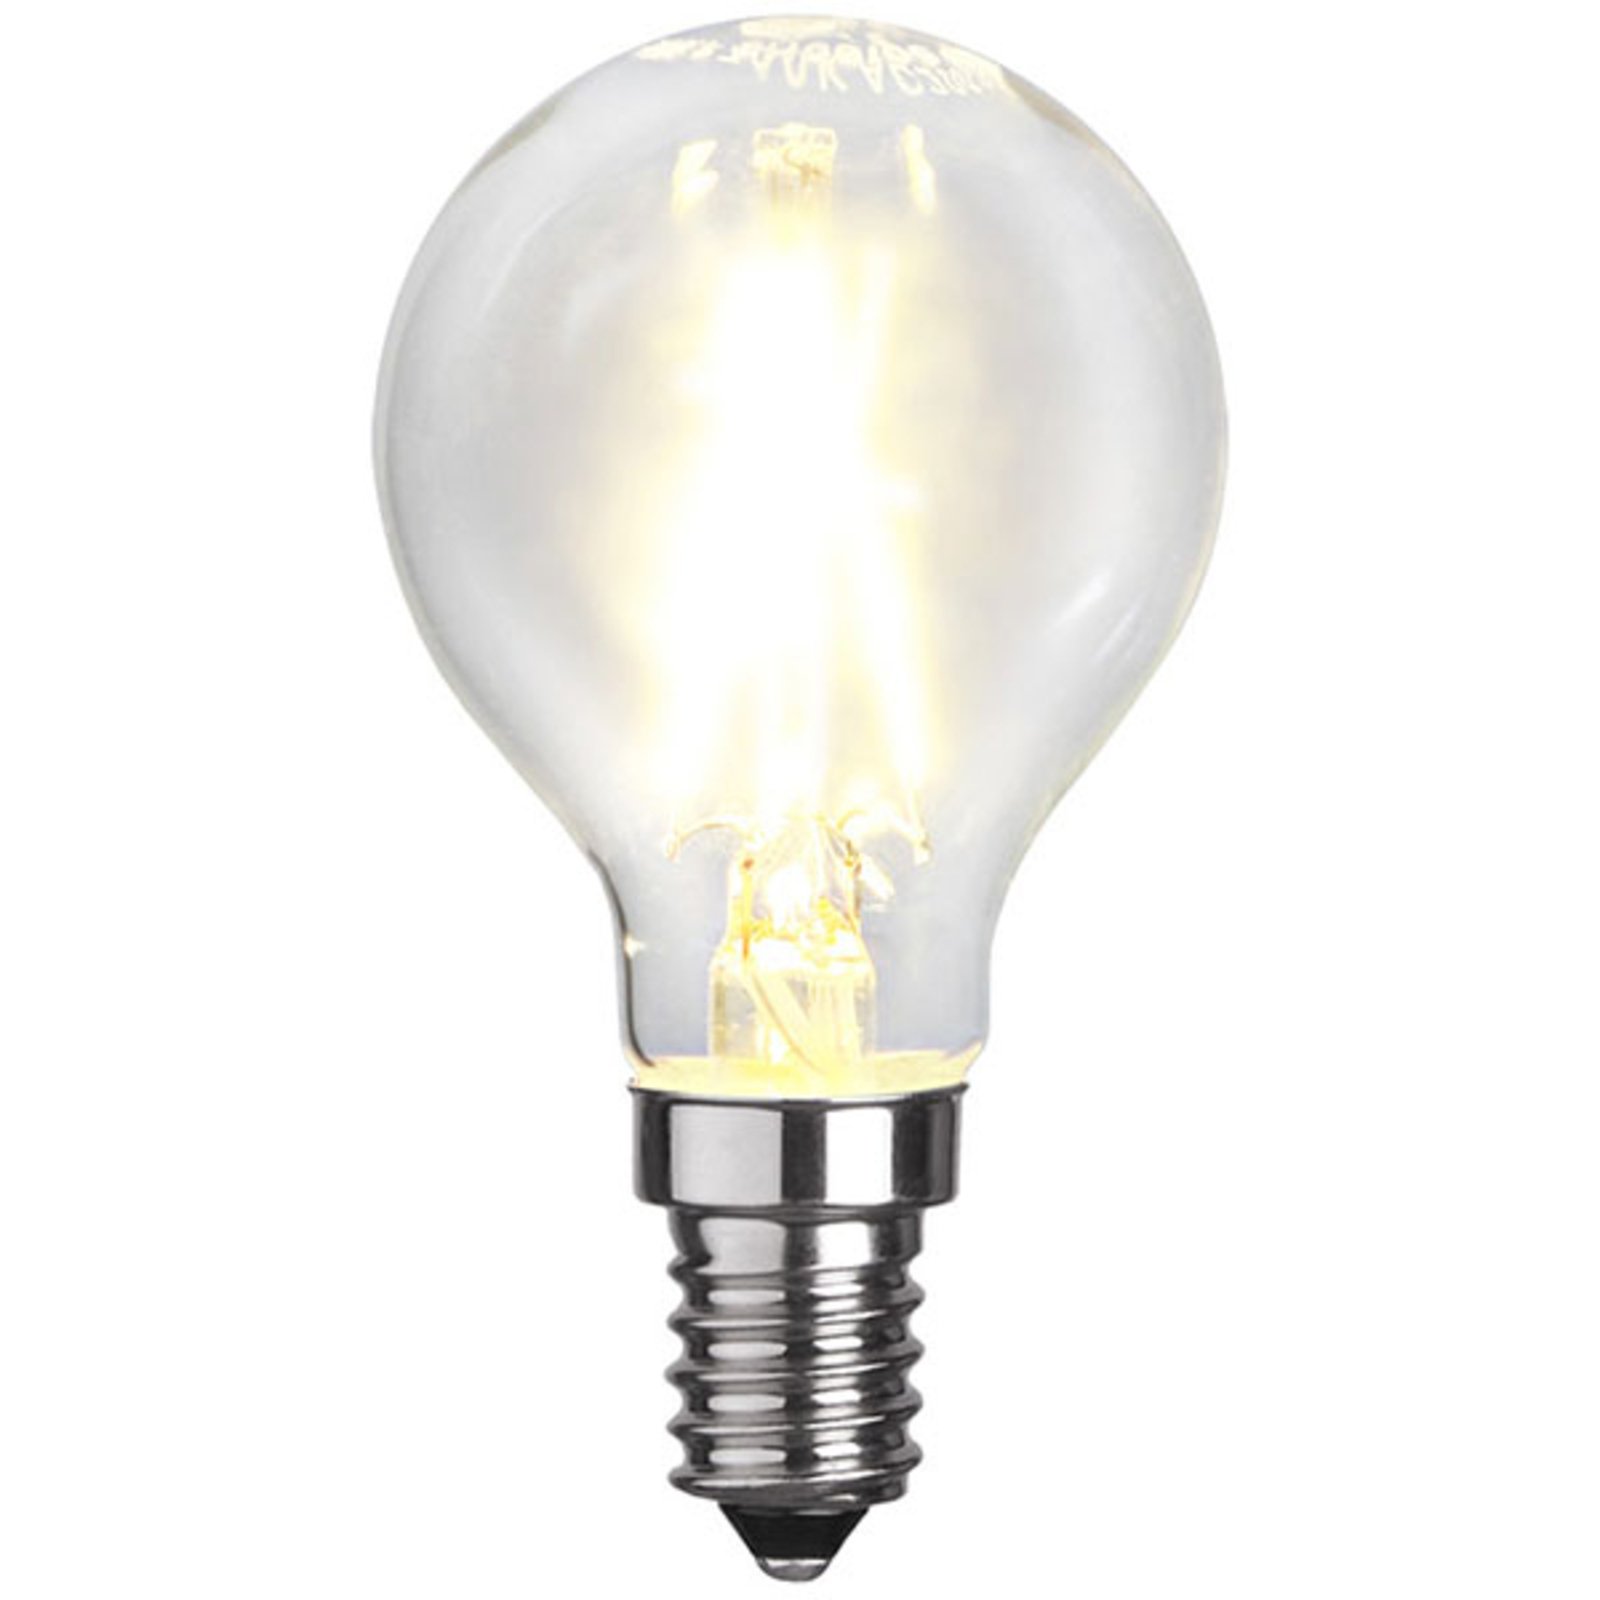 LED tilk lamp E14 P45 2W 2700K hõõgniit